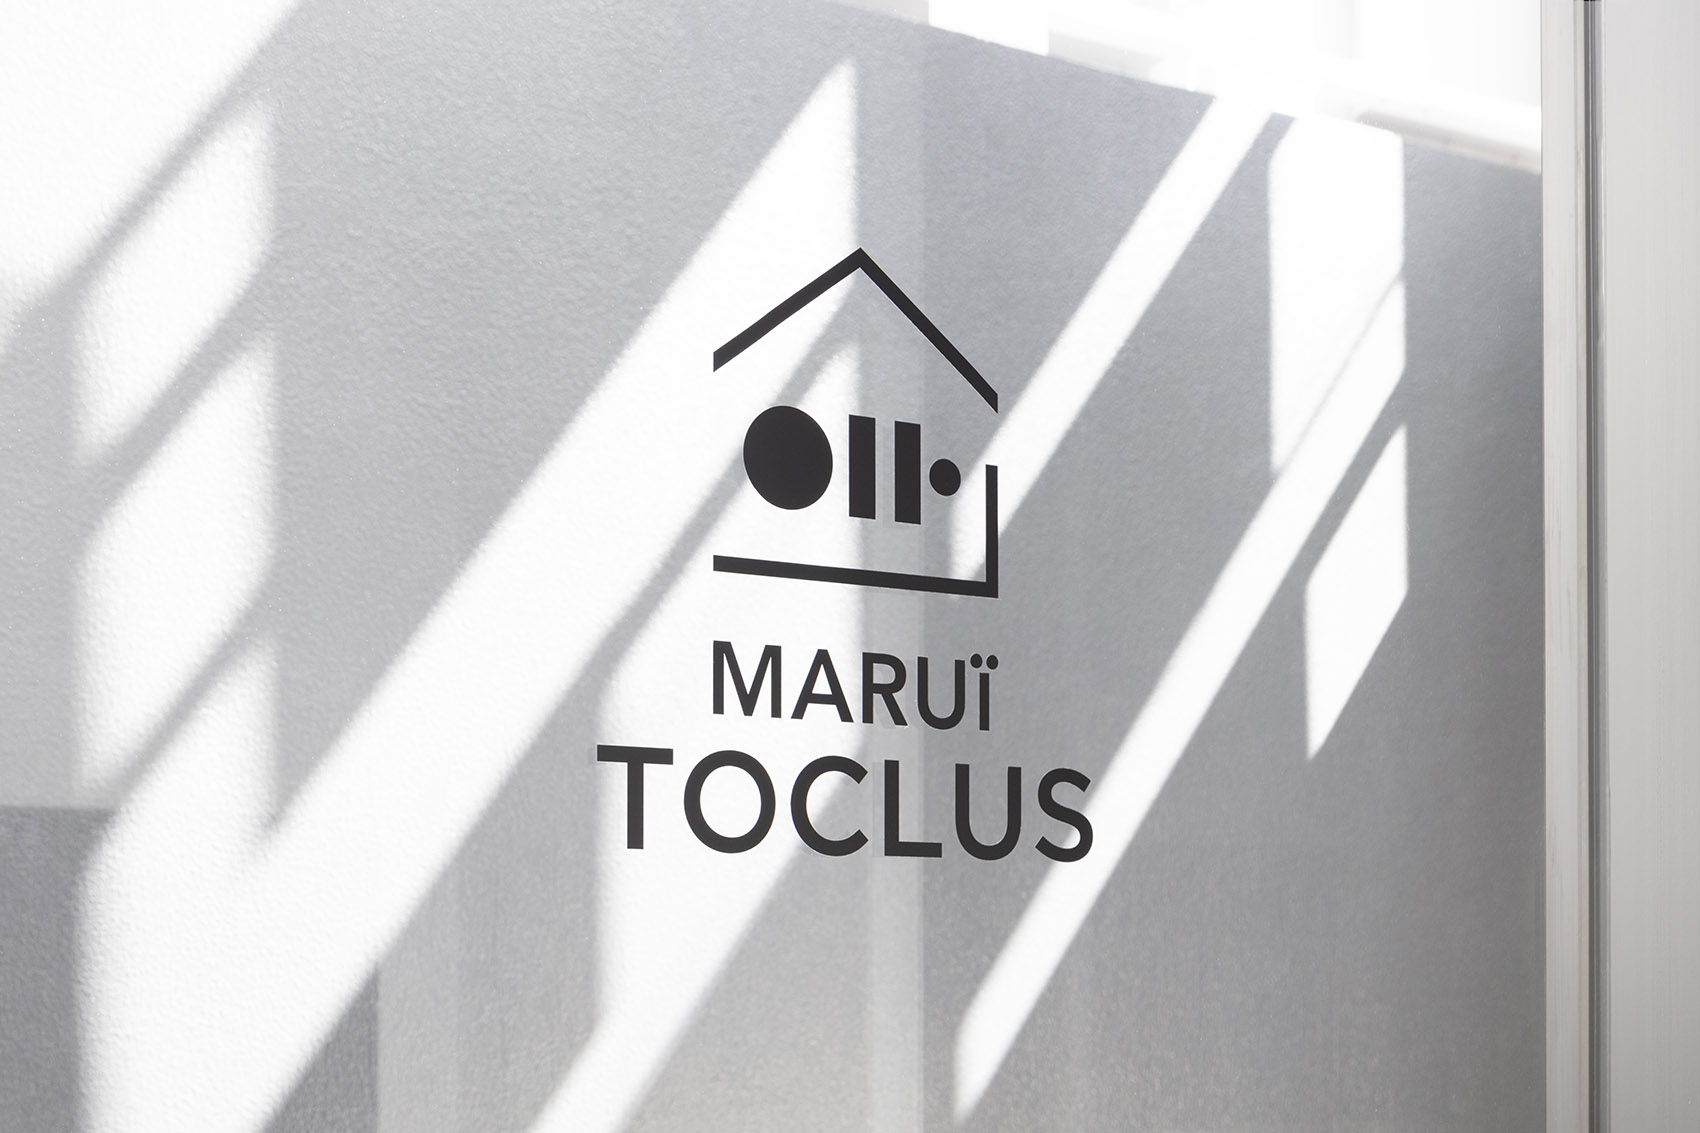 MARUI TOCLUS综合共享住宅，东京/将商业空间转化成展示新生活方式和社区文化的场所-138